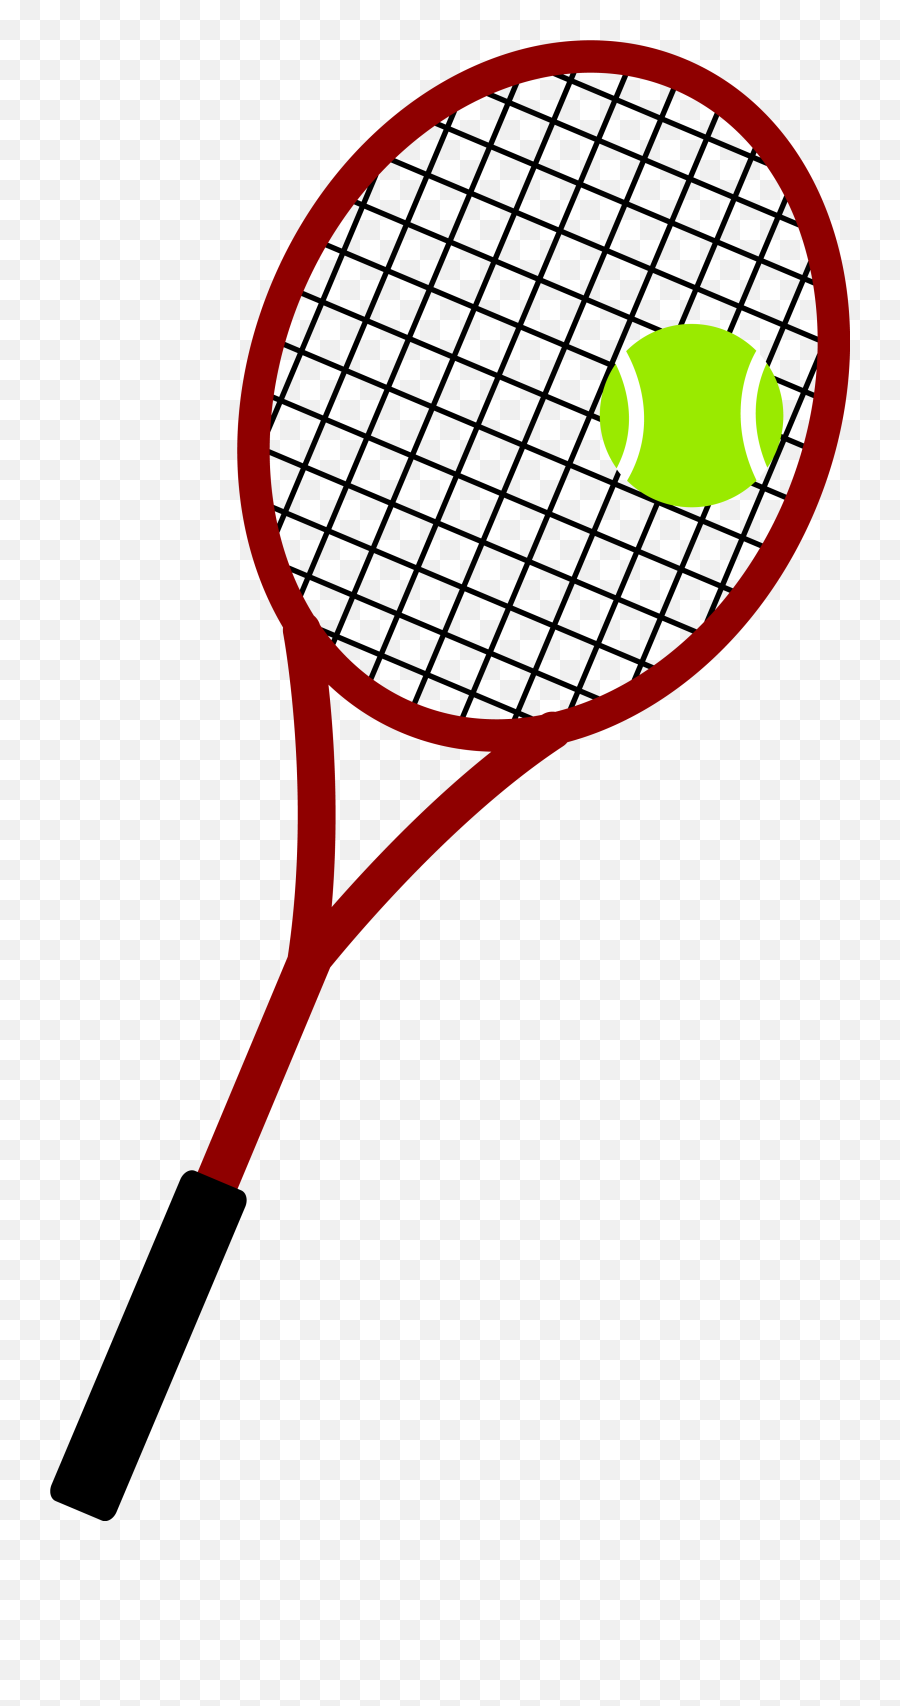 No Background Png Files - Tennis Racket Clip Art,Tennis Ball Png